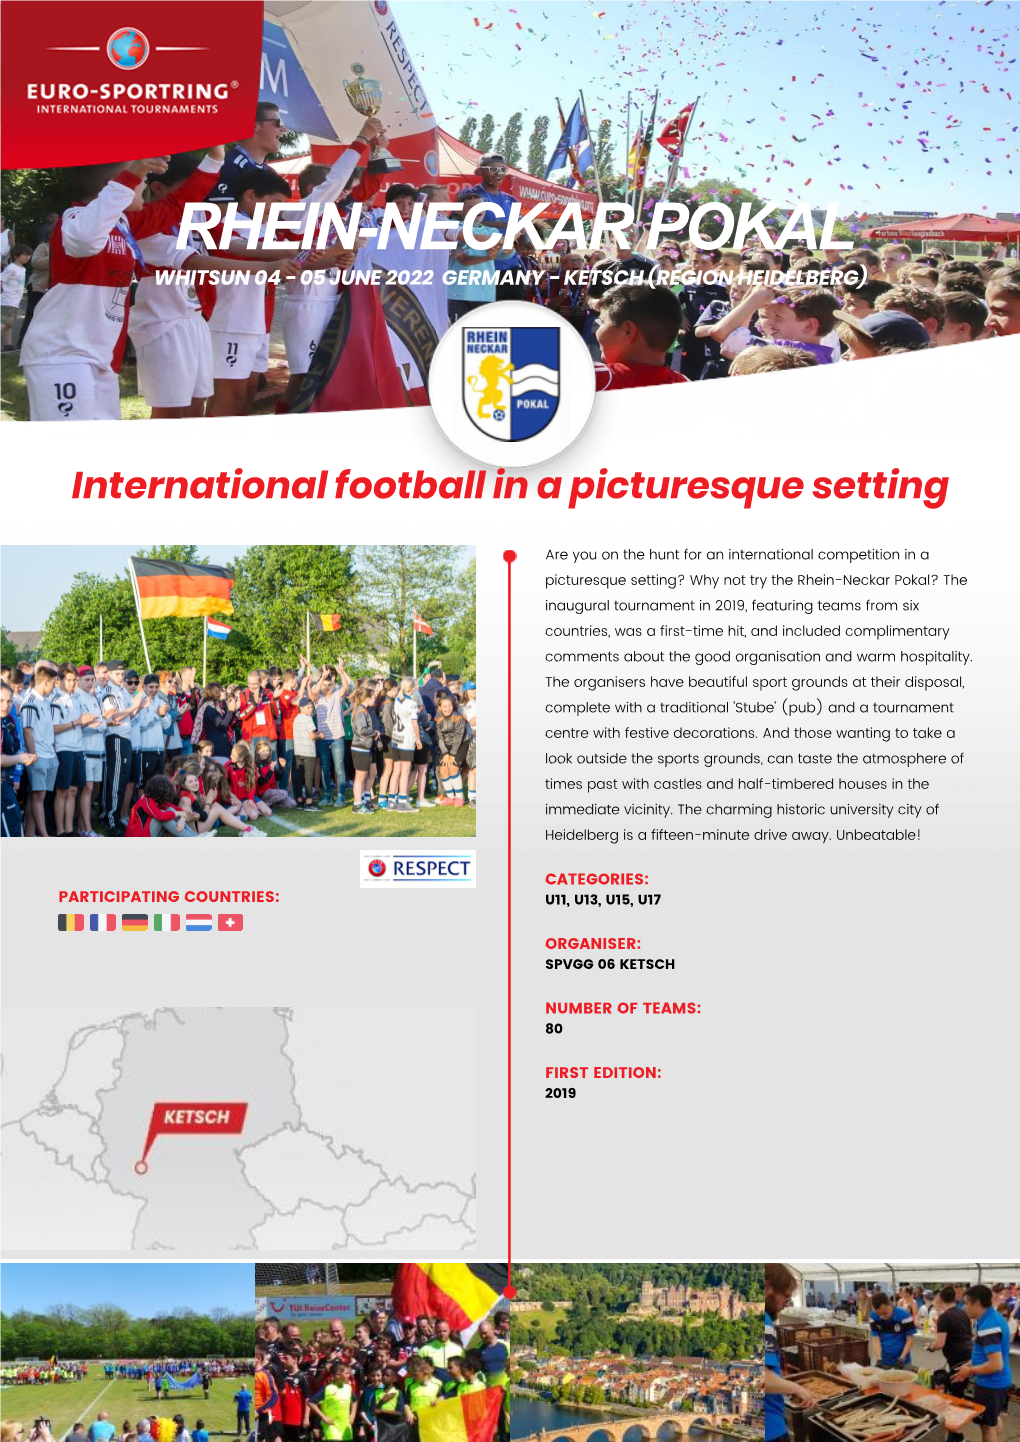 Rhein-Neckar Pokal Whitsun 04 - 05 June 2022 Germany - Ketsch (Region Heidelberg)